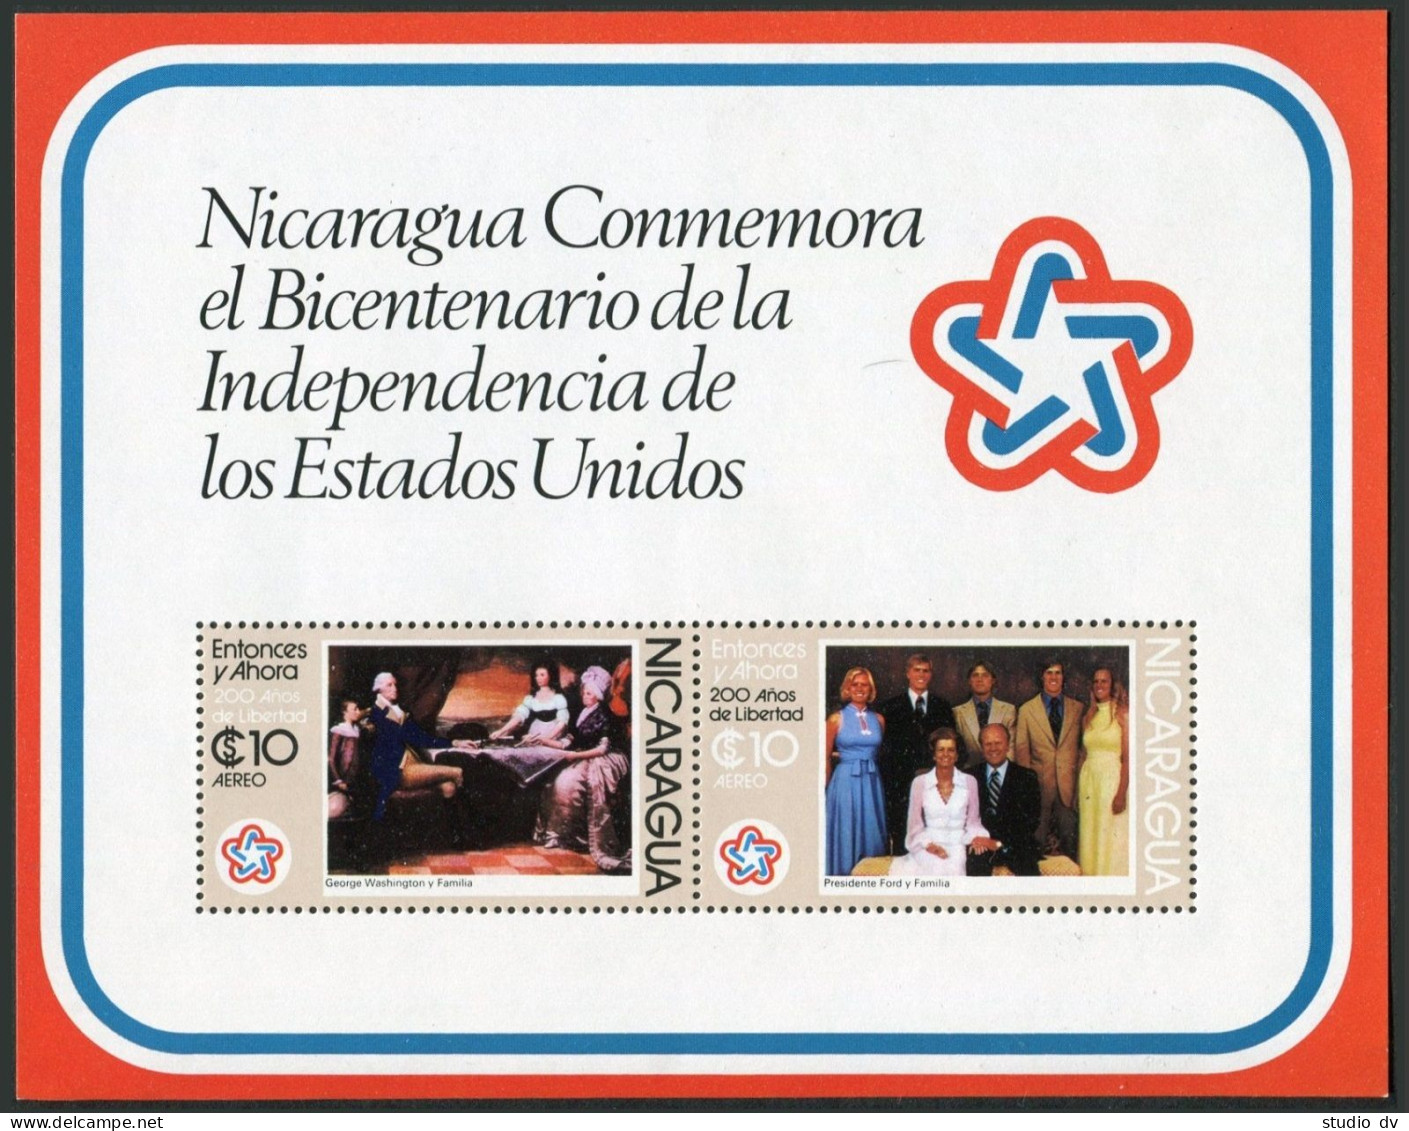 Nicaragua C912b, MNH. Mi Bl.93. US-200,1976. George Washington,Gerald R.Ford. - Nicaragua